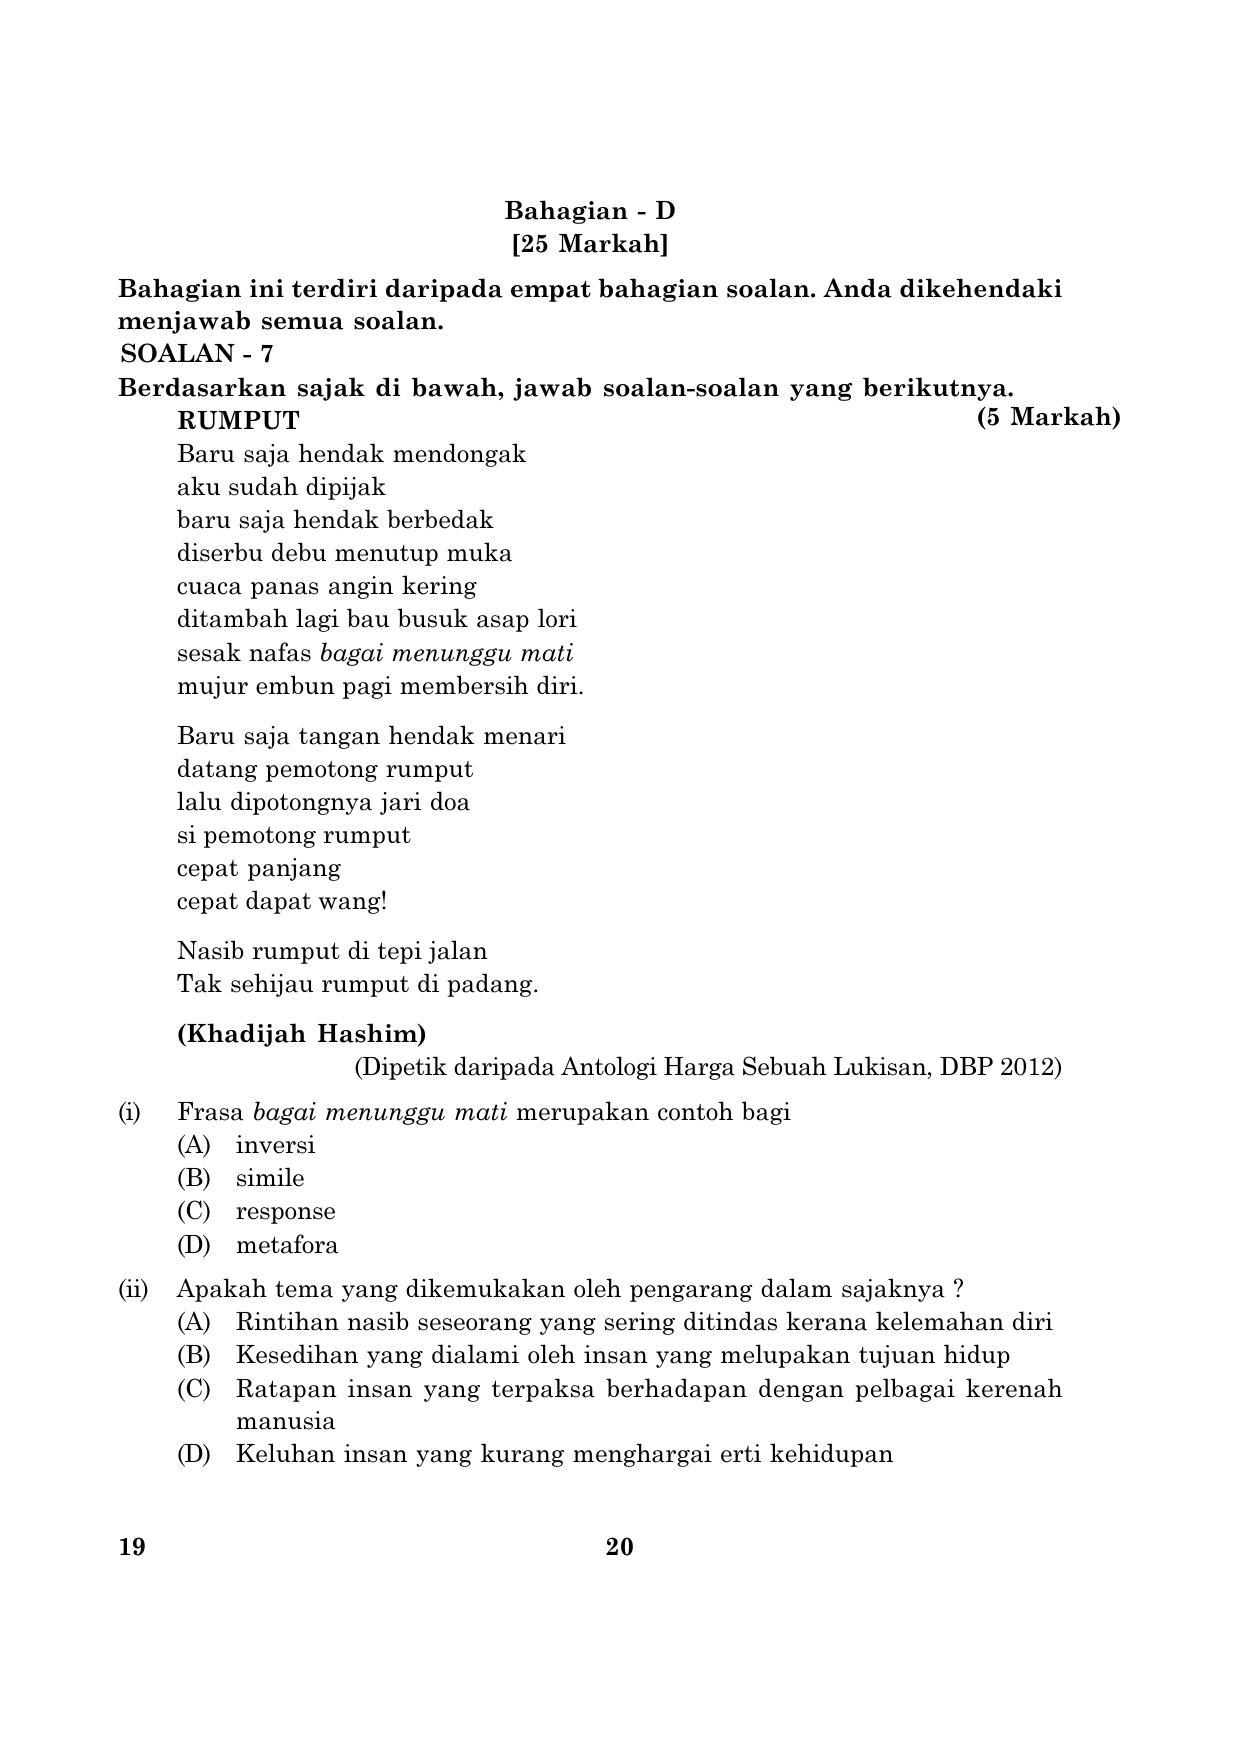 CBSE Class 10 019 Bahasamelayu English 2016 Question Paper - Page 20